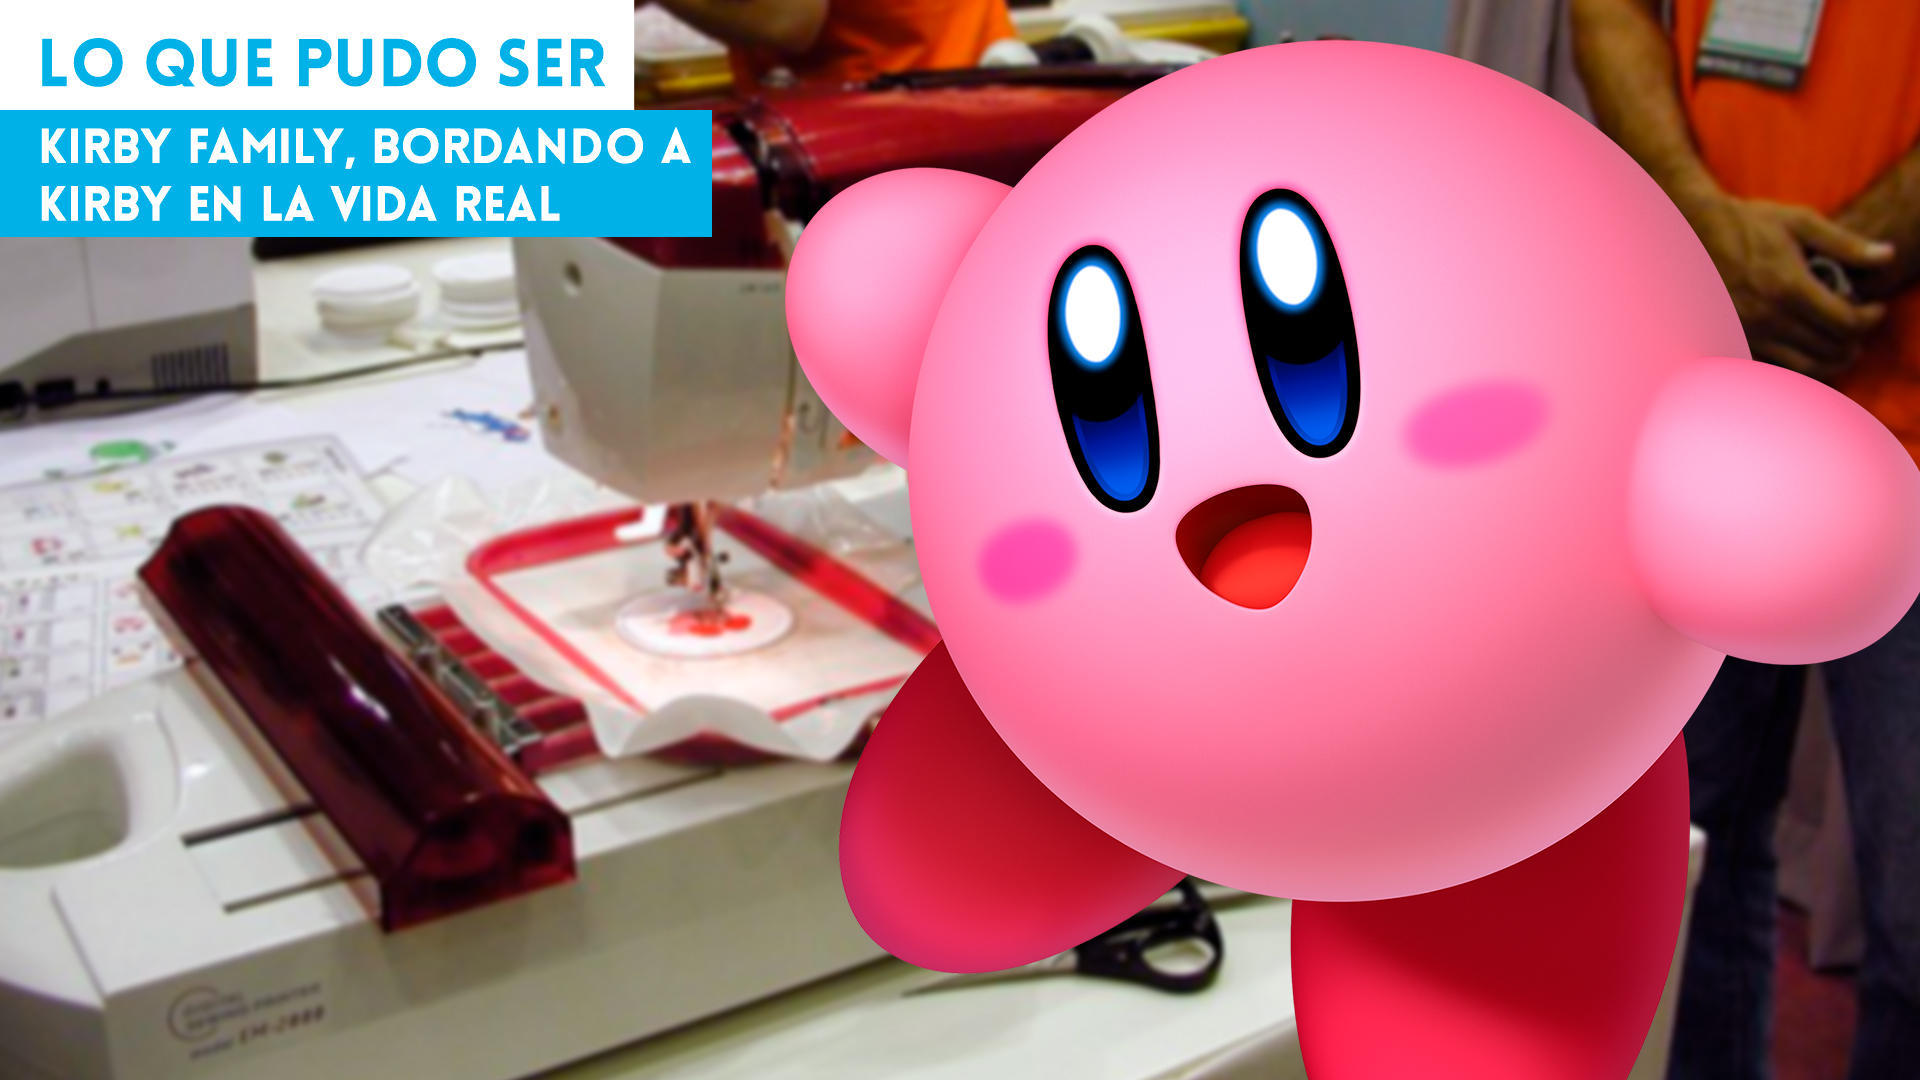 Kirby Family, bordando a Kirby en la vida real